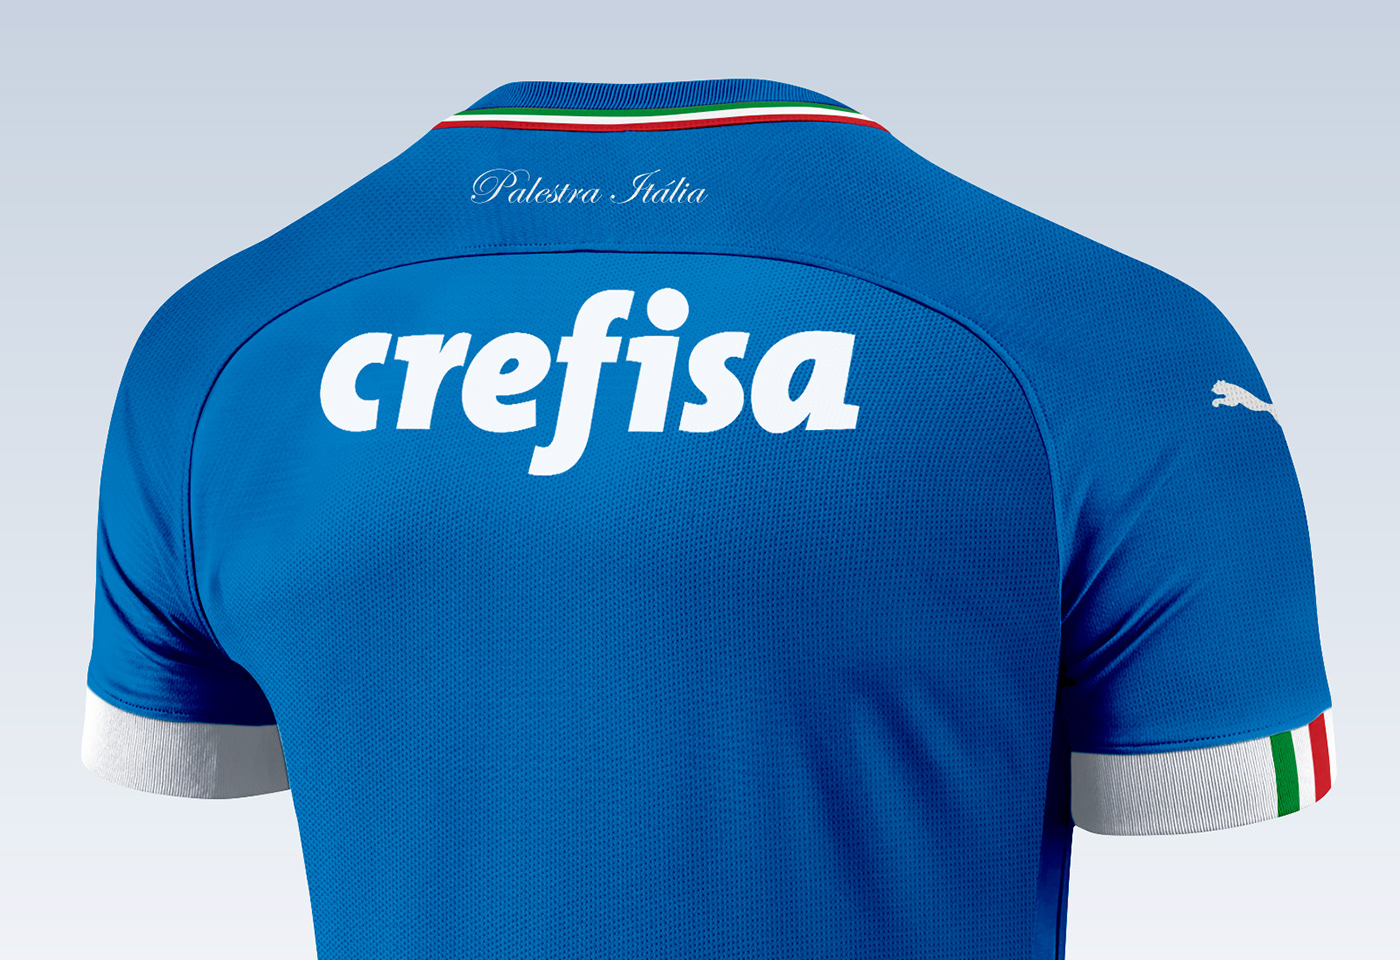 camisa Crefisa futebol italia Italy palmeiras puma Savoia soccer shirt